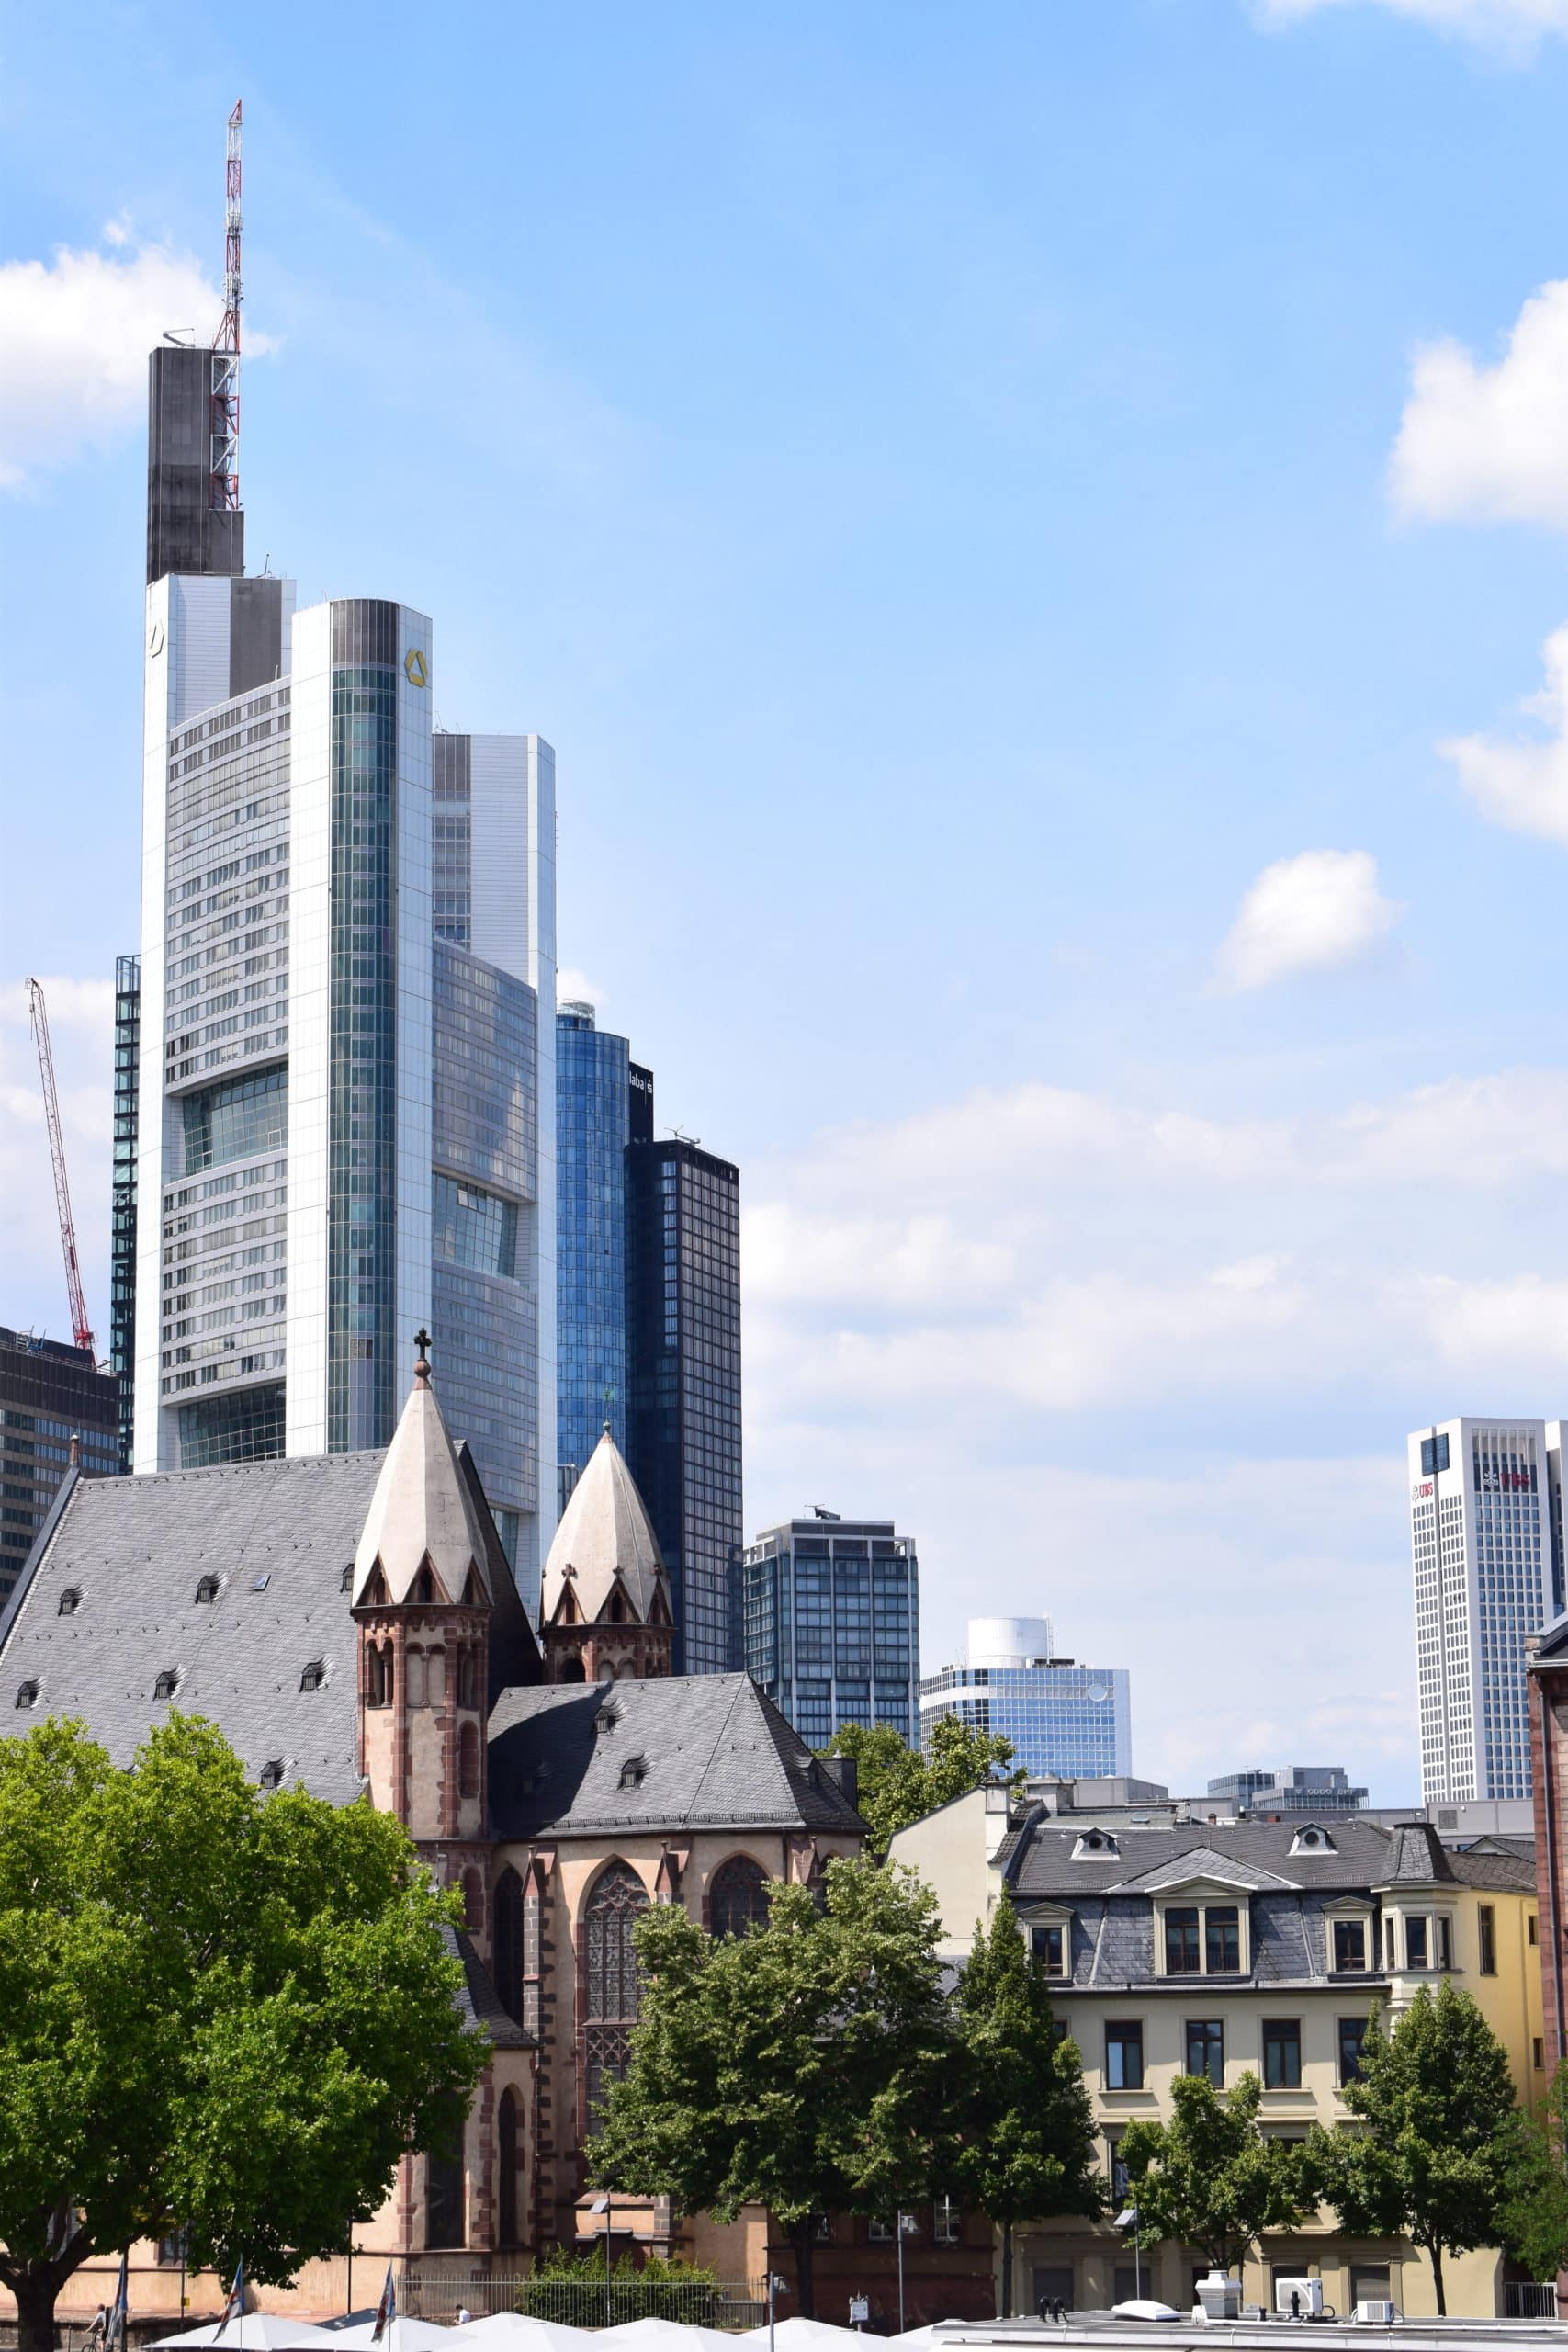 Citytrip Frankfurt – the German “Mainhattan”